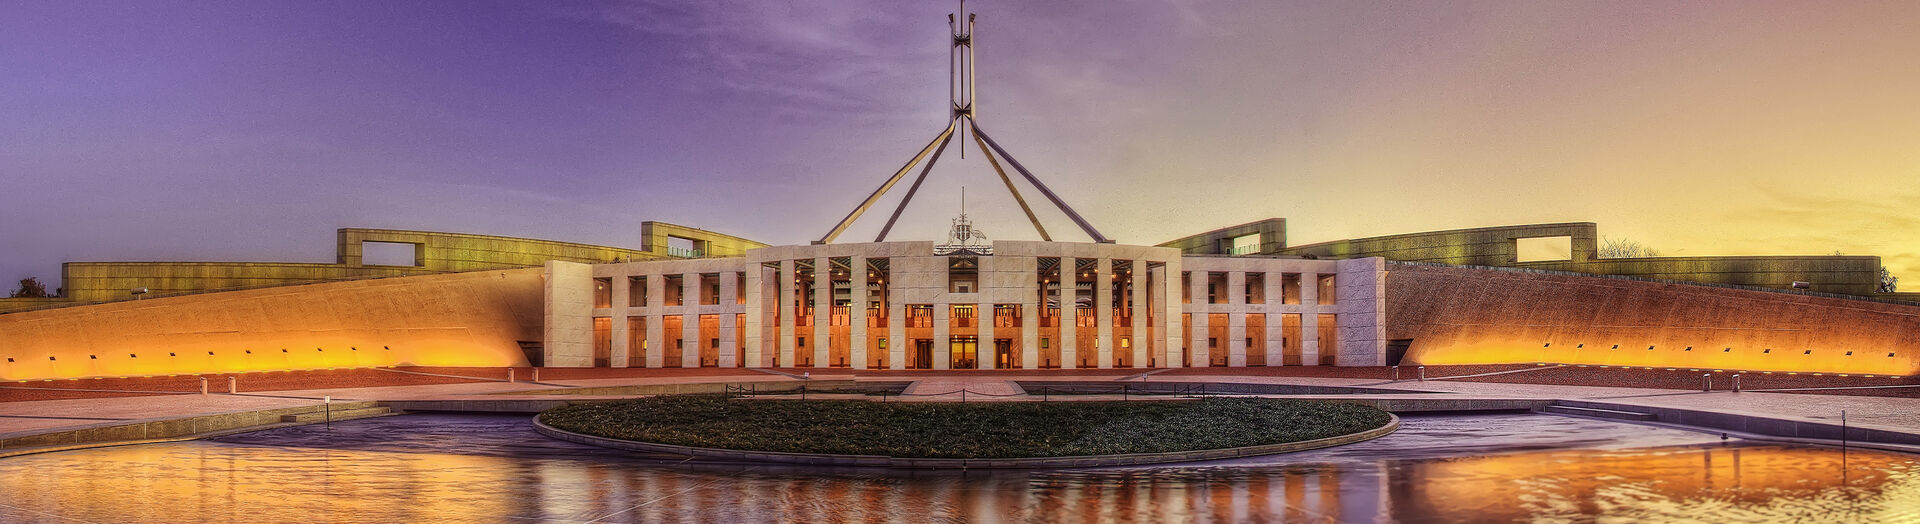 Parliament House, Australian Capital Territory